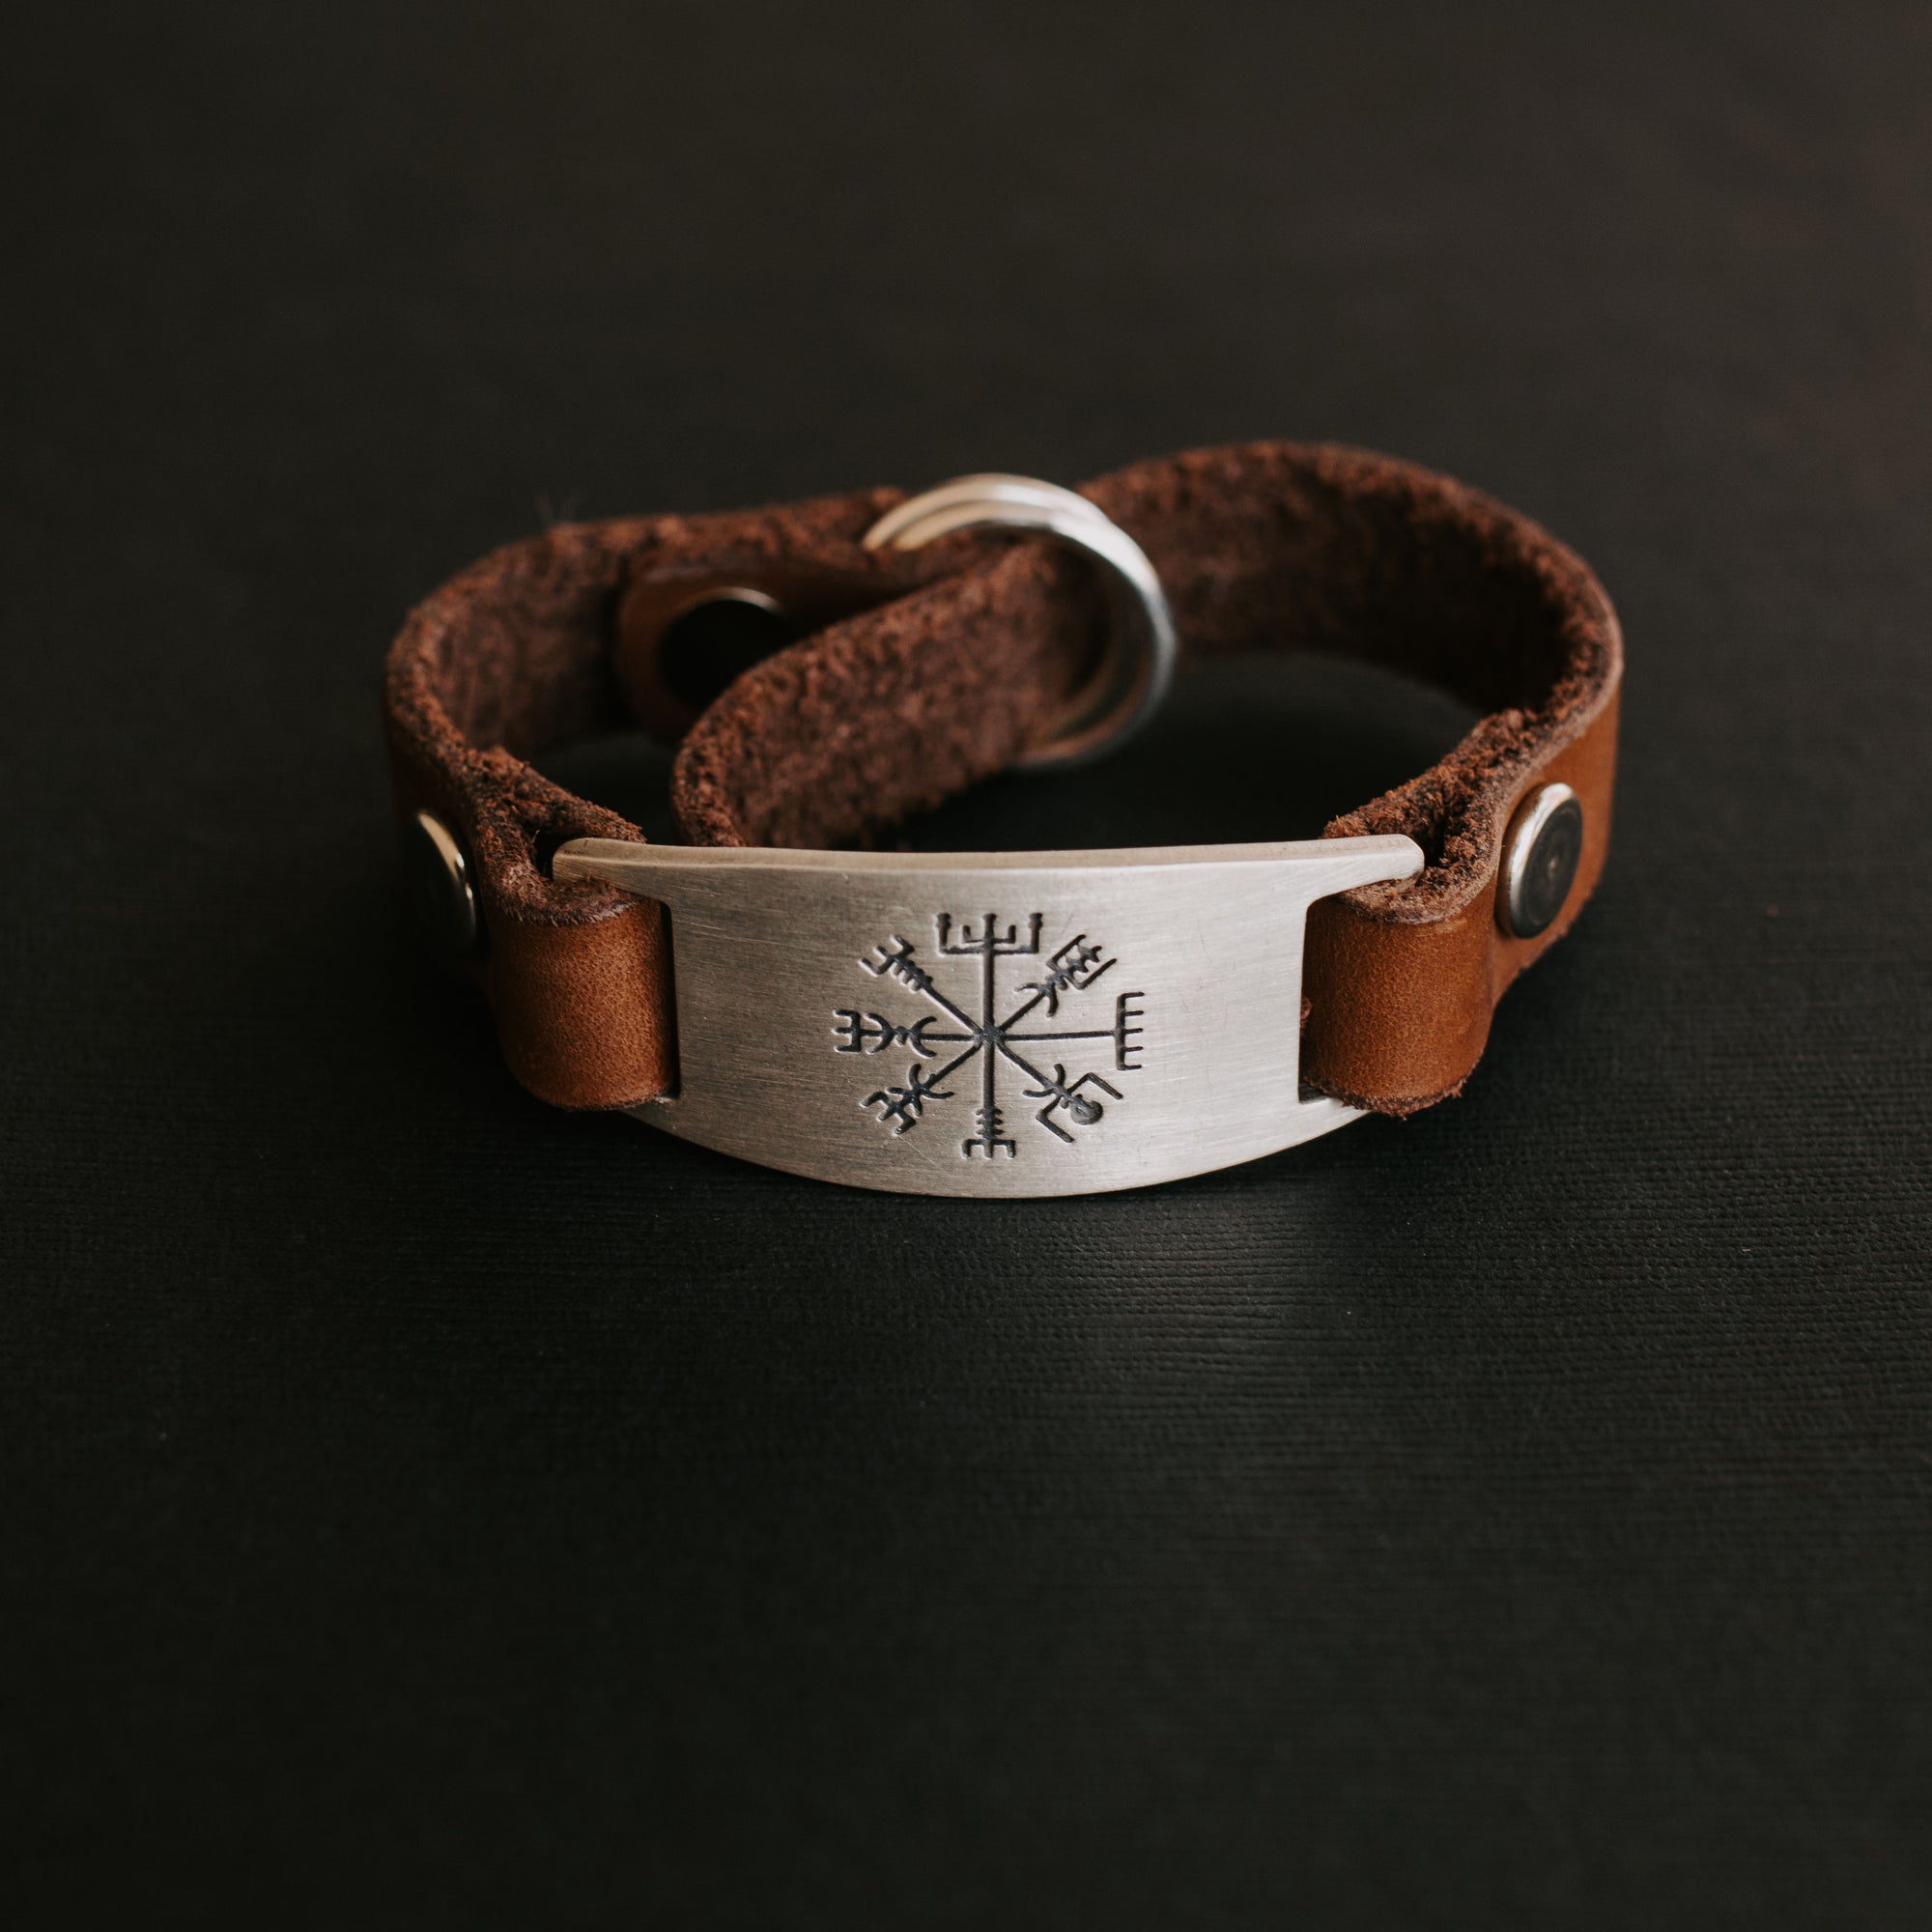 James Avery Artisan Jewelry - Woven Latitude Antique Brown Leather Bracelet  bit.ly/2blYfMk | Facebook